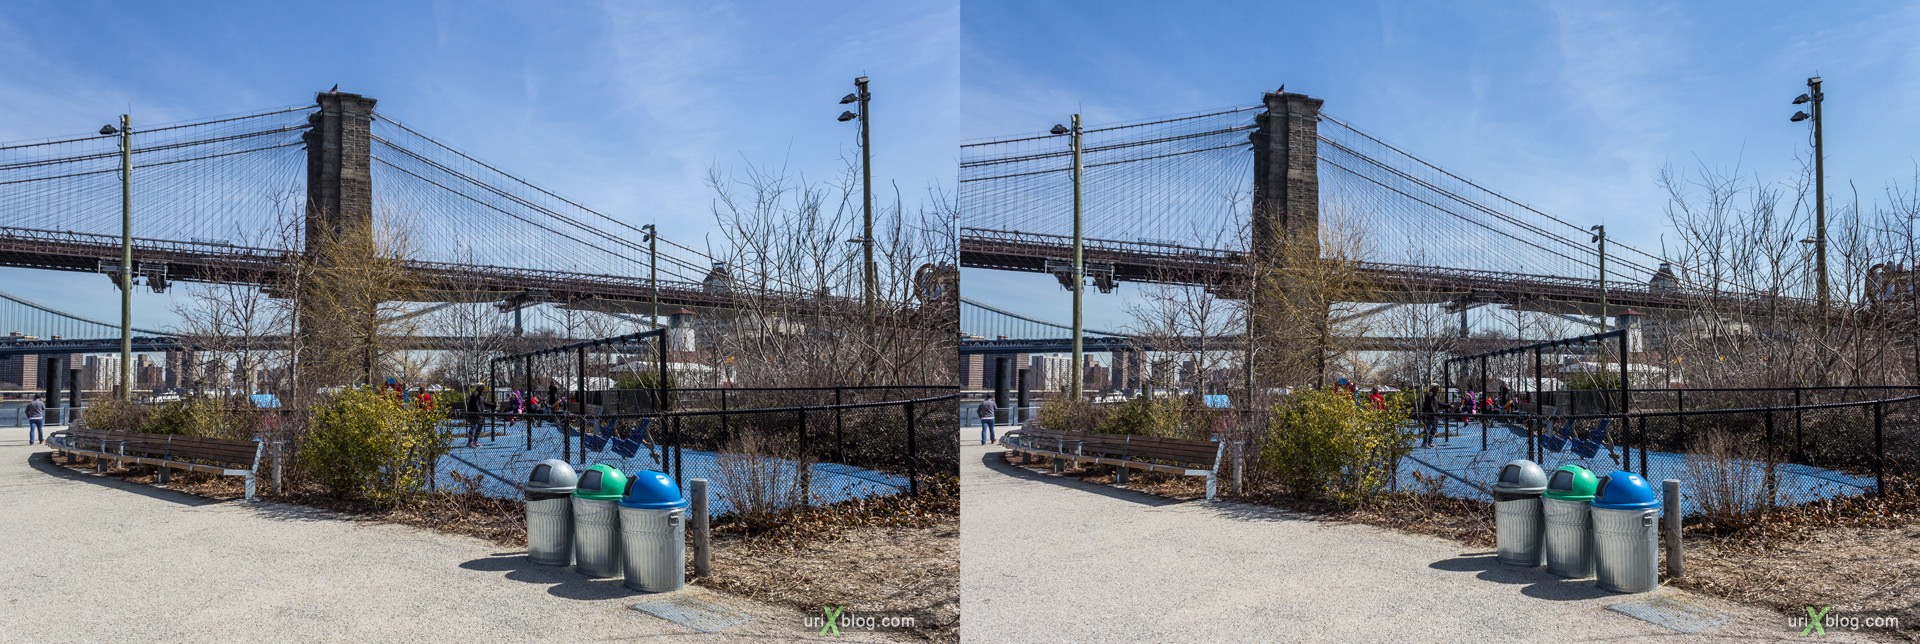 2013, Brooklyn Bridge park, Brooklyn, NYC, New York City, USA, 3D, stereo pair, cross-eyed, crossview, cross view stereo pair, stereoscopic